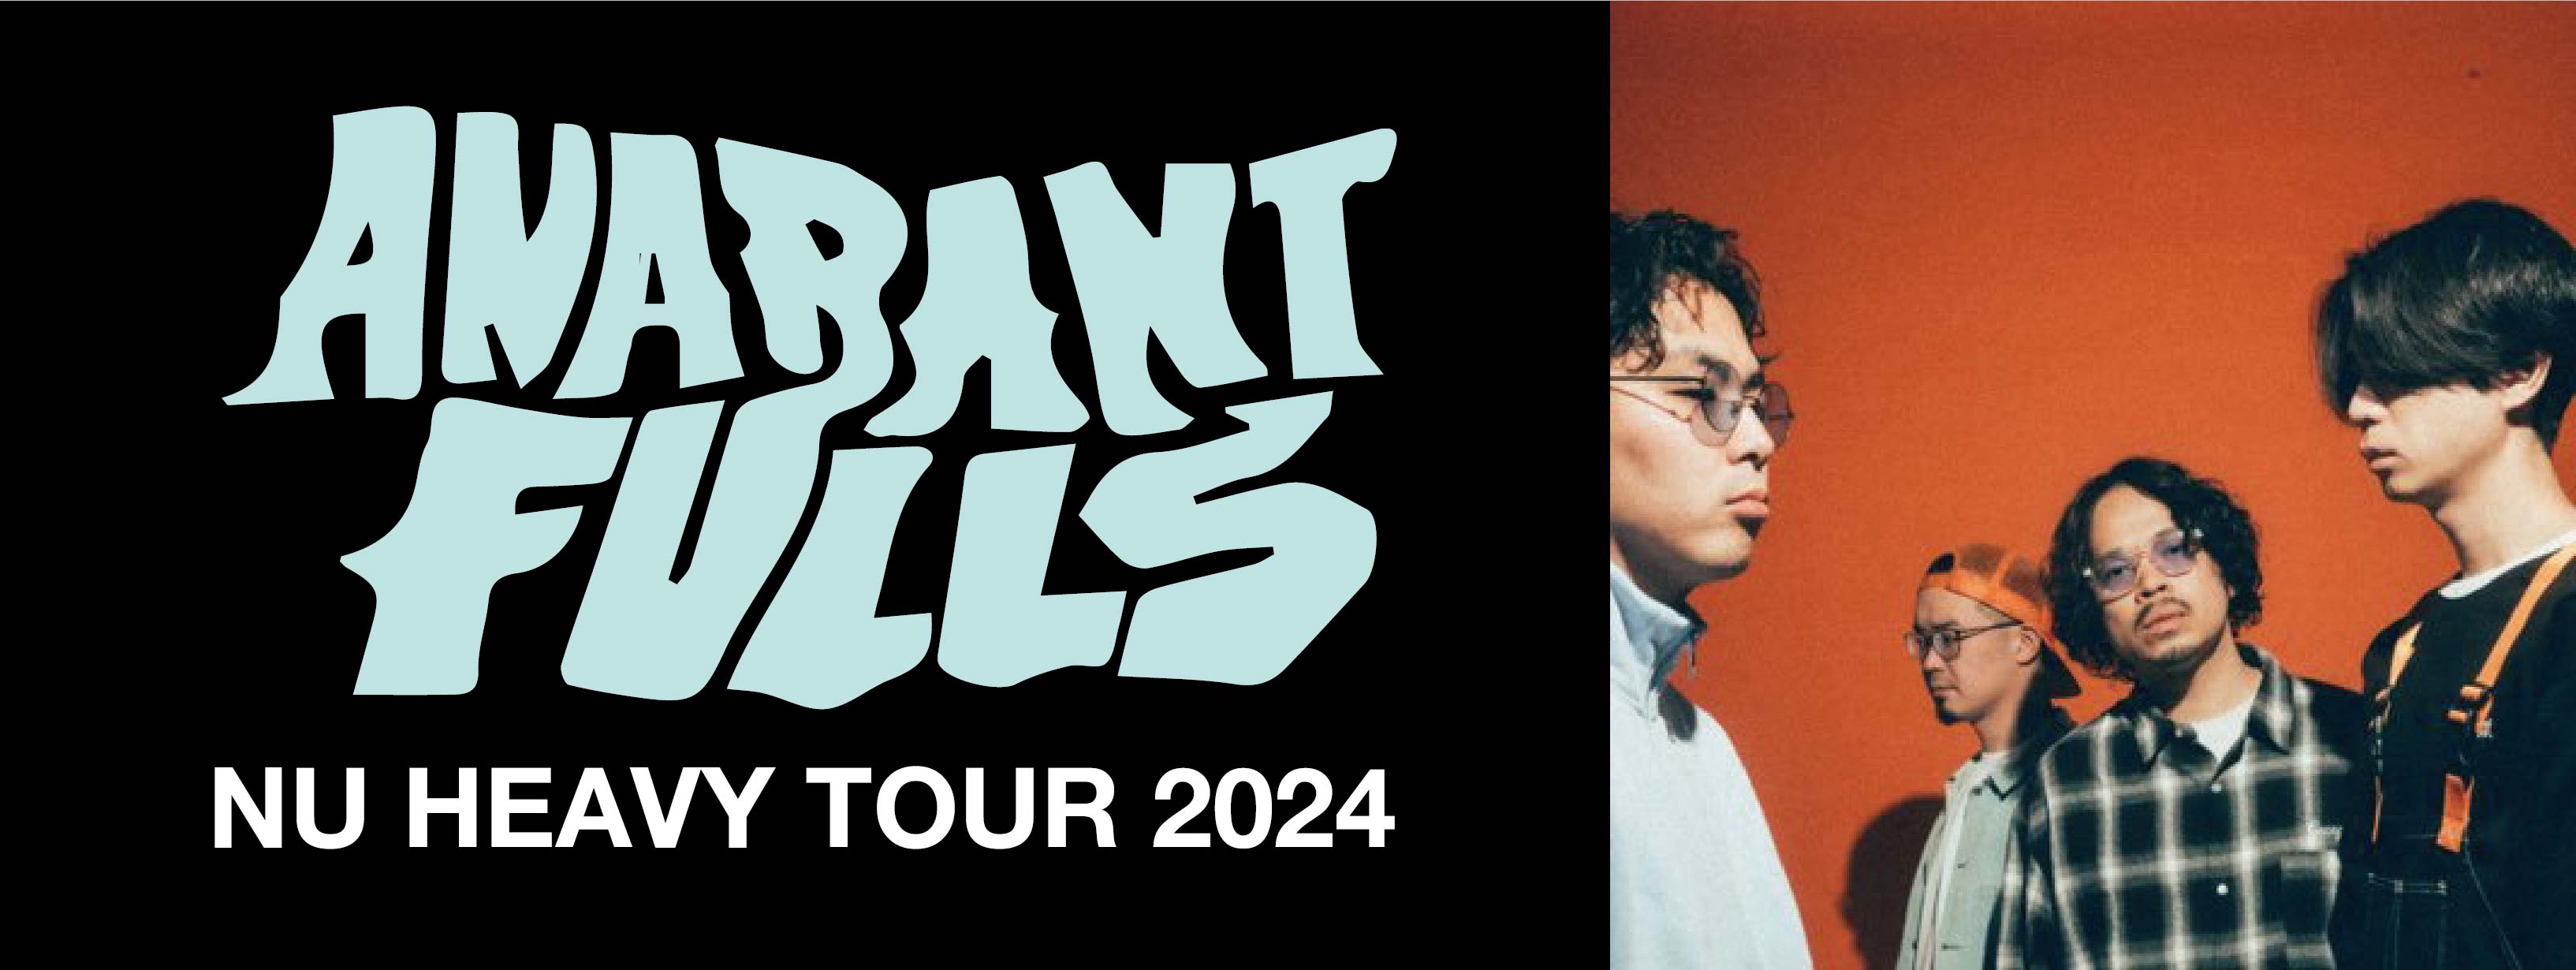 ANABANTFULLS ｢NU HEAVY TOUR 2024｣